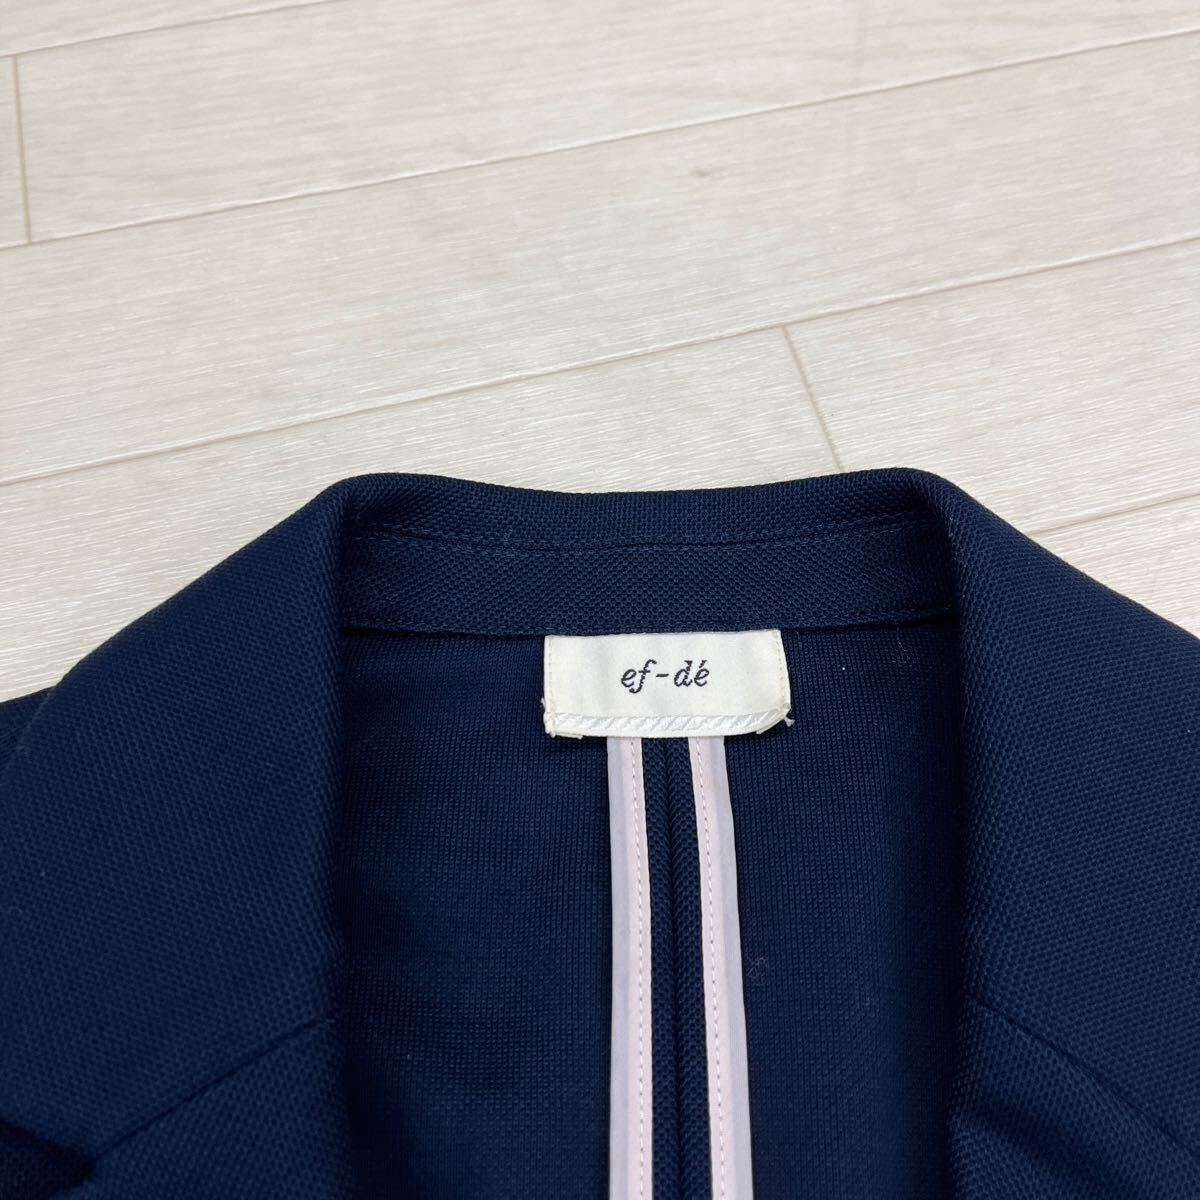 1396* new goods unused ef-de ef-de tops tailored jacket single 2 button long sleeve plain casual navy lady's 9